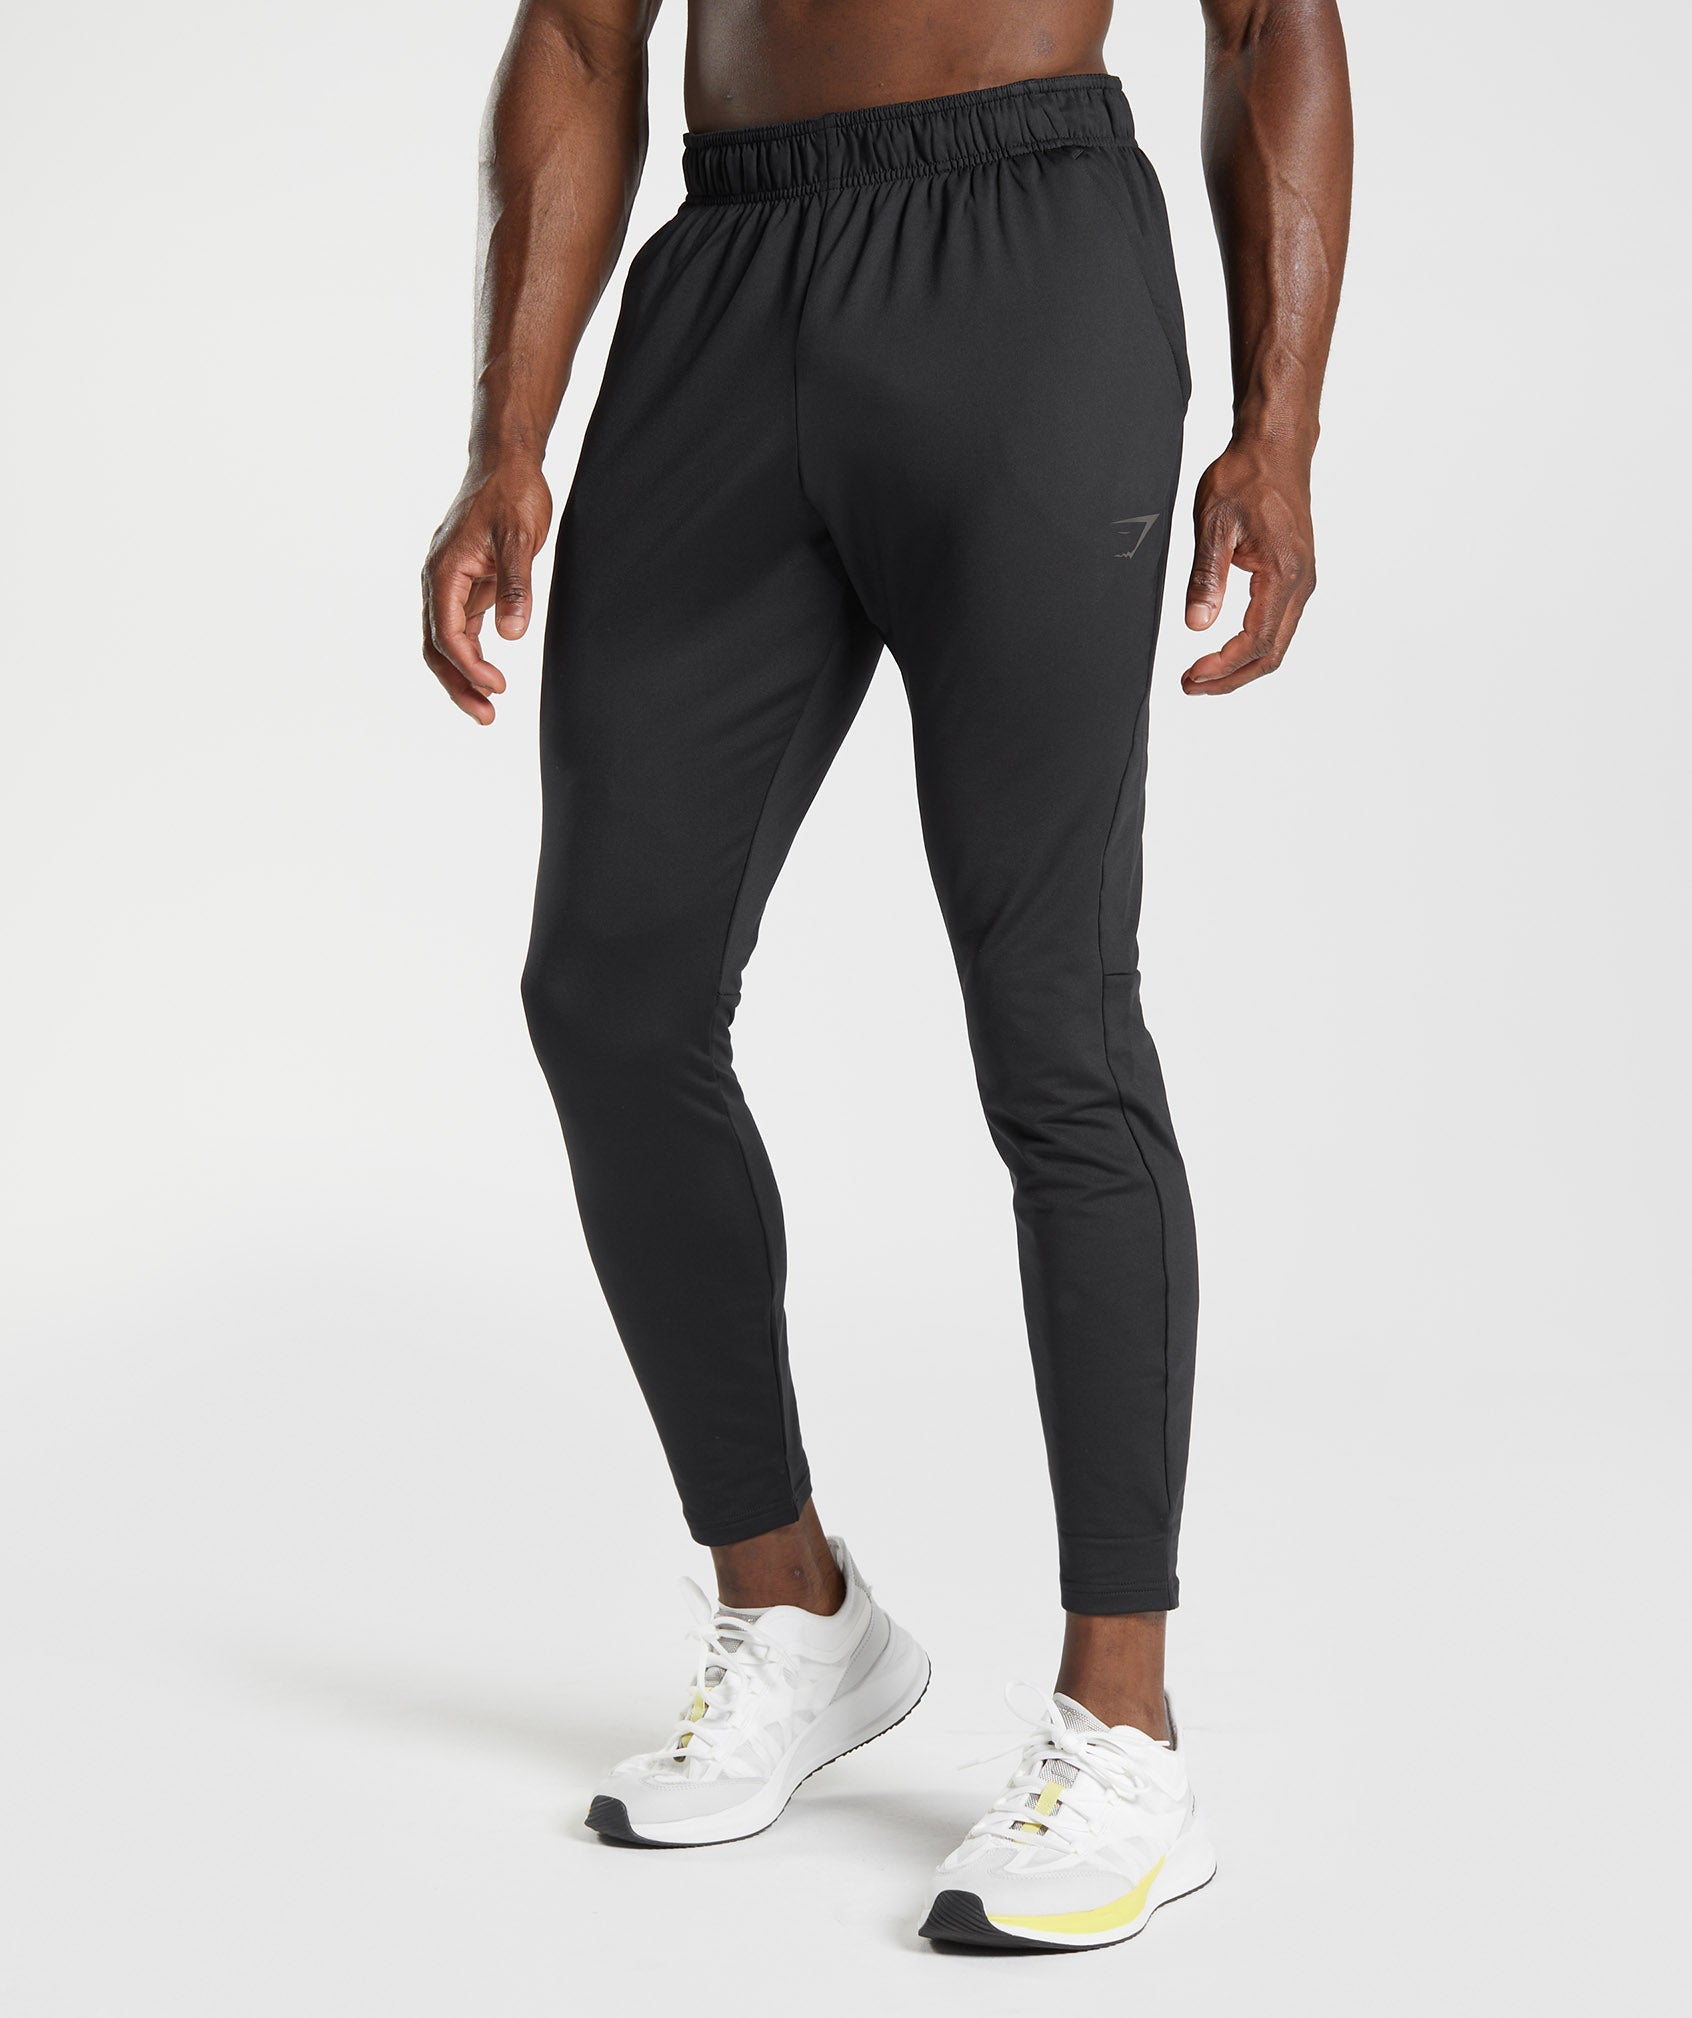 Gymshark Athletic Active Pants for Men